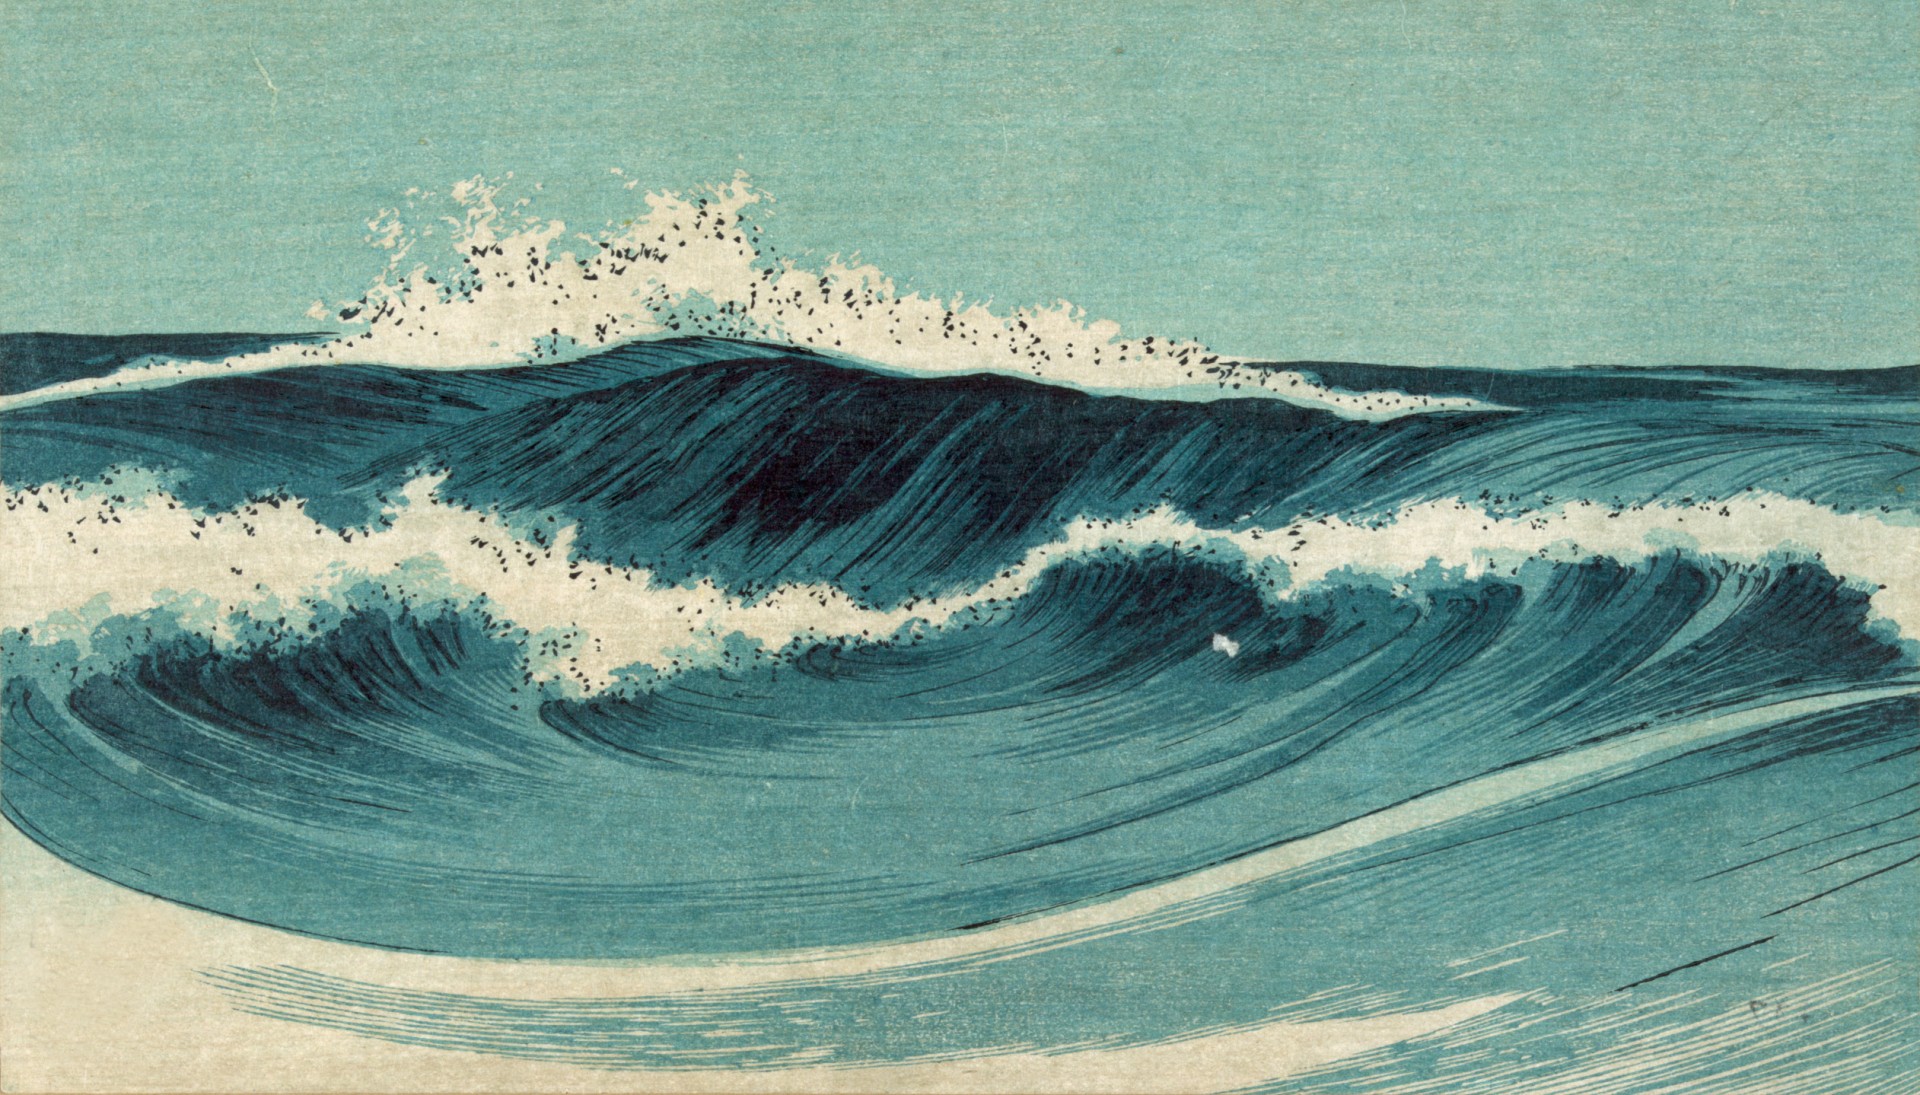 Japanese Waves Painting Free Stock Photo Public Domain